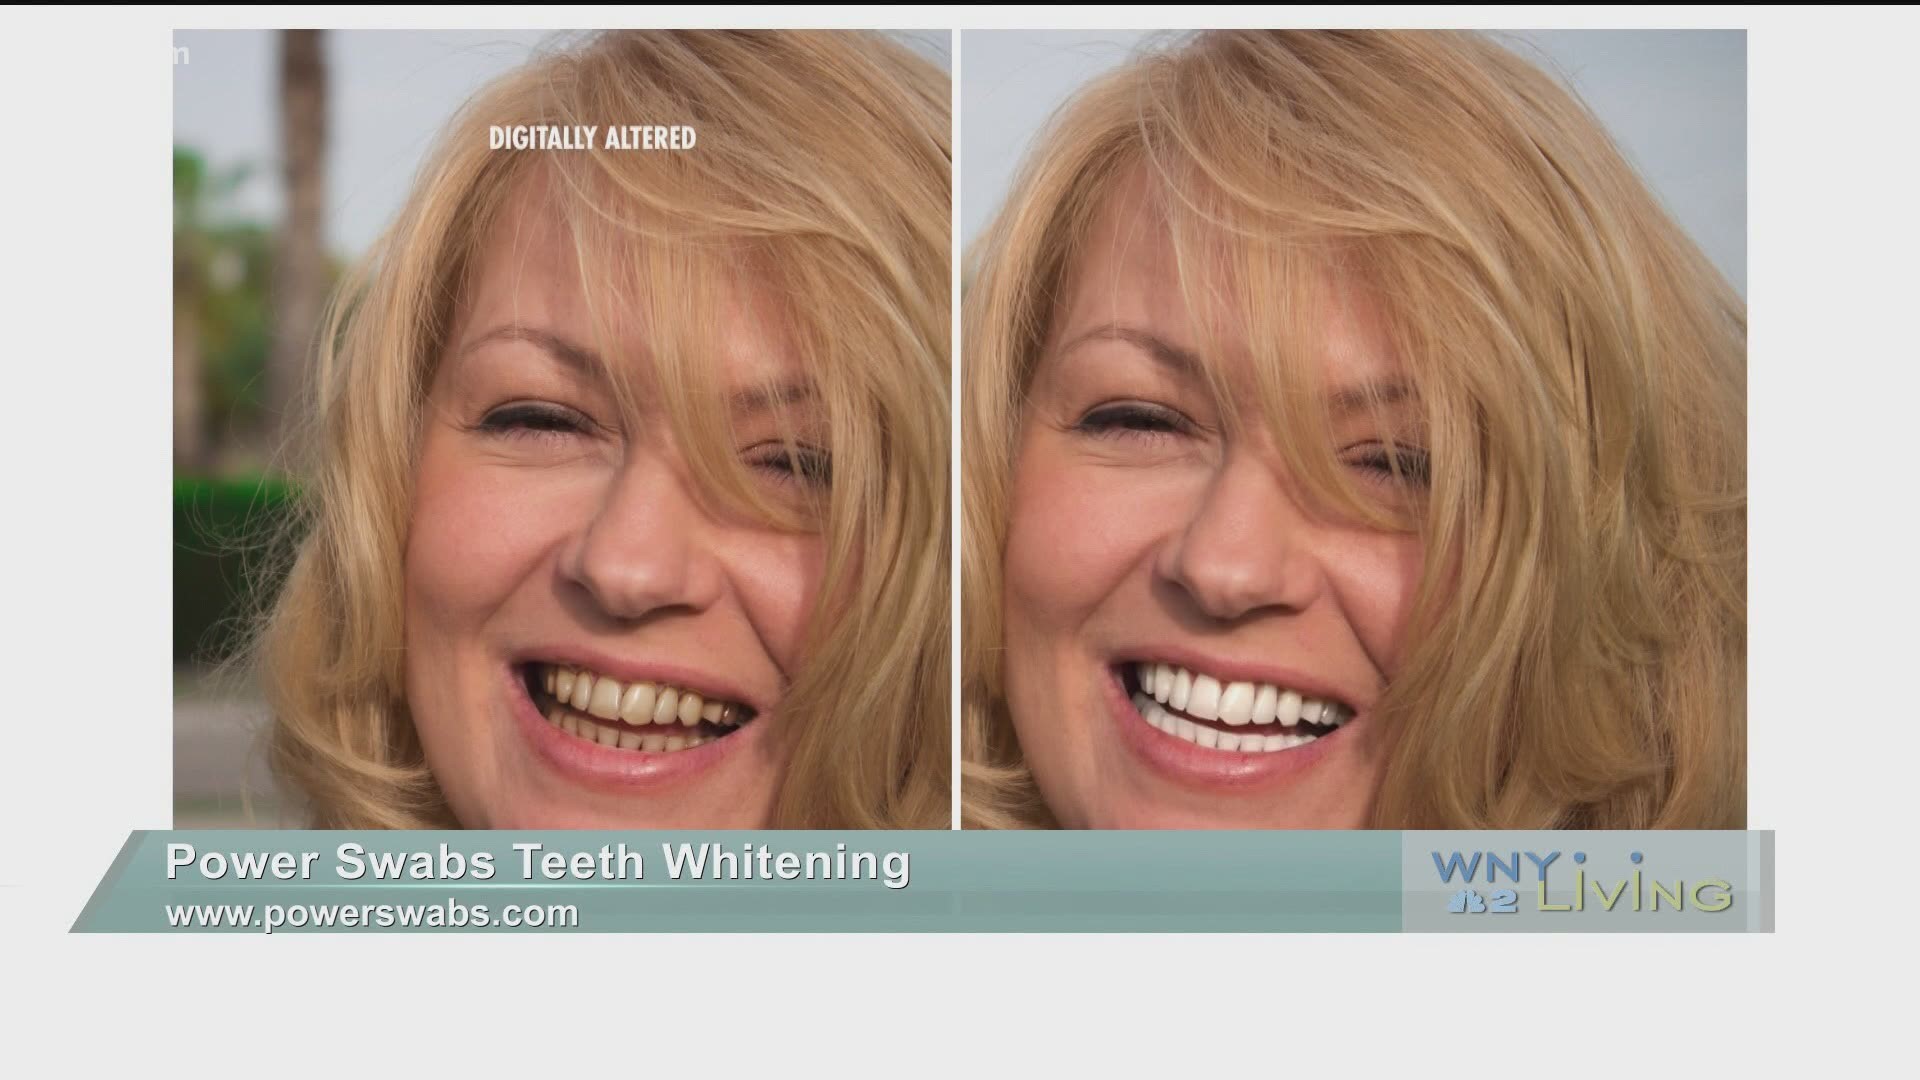 WNY Living - September 19 - Power Swabs Teeth Whitening (THIS VIDEO IS SPONSORED BY POWER SWABS TEETH WHITENING)